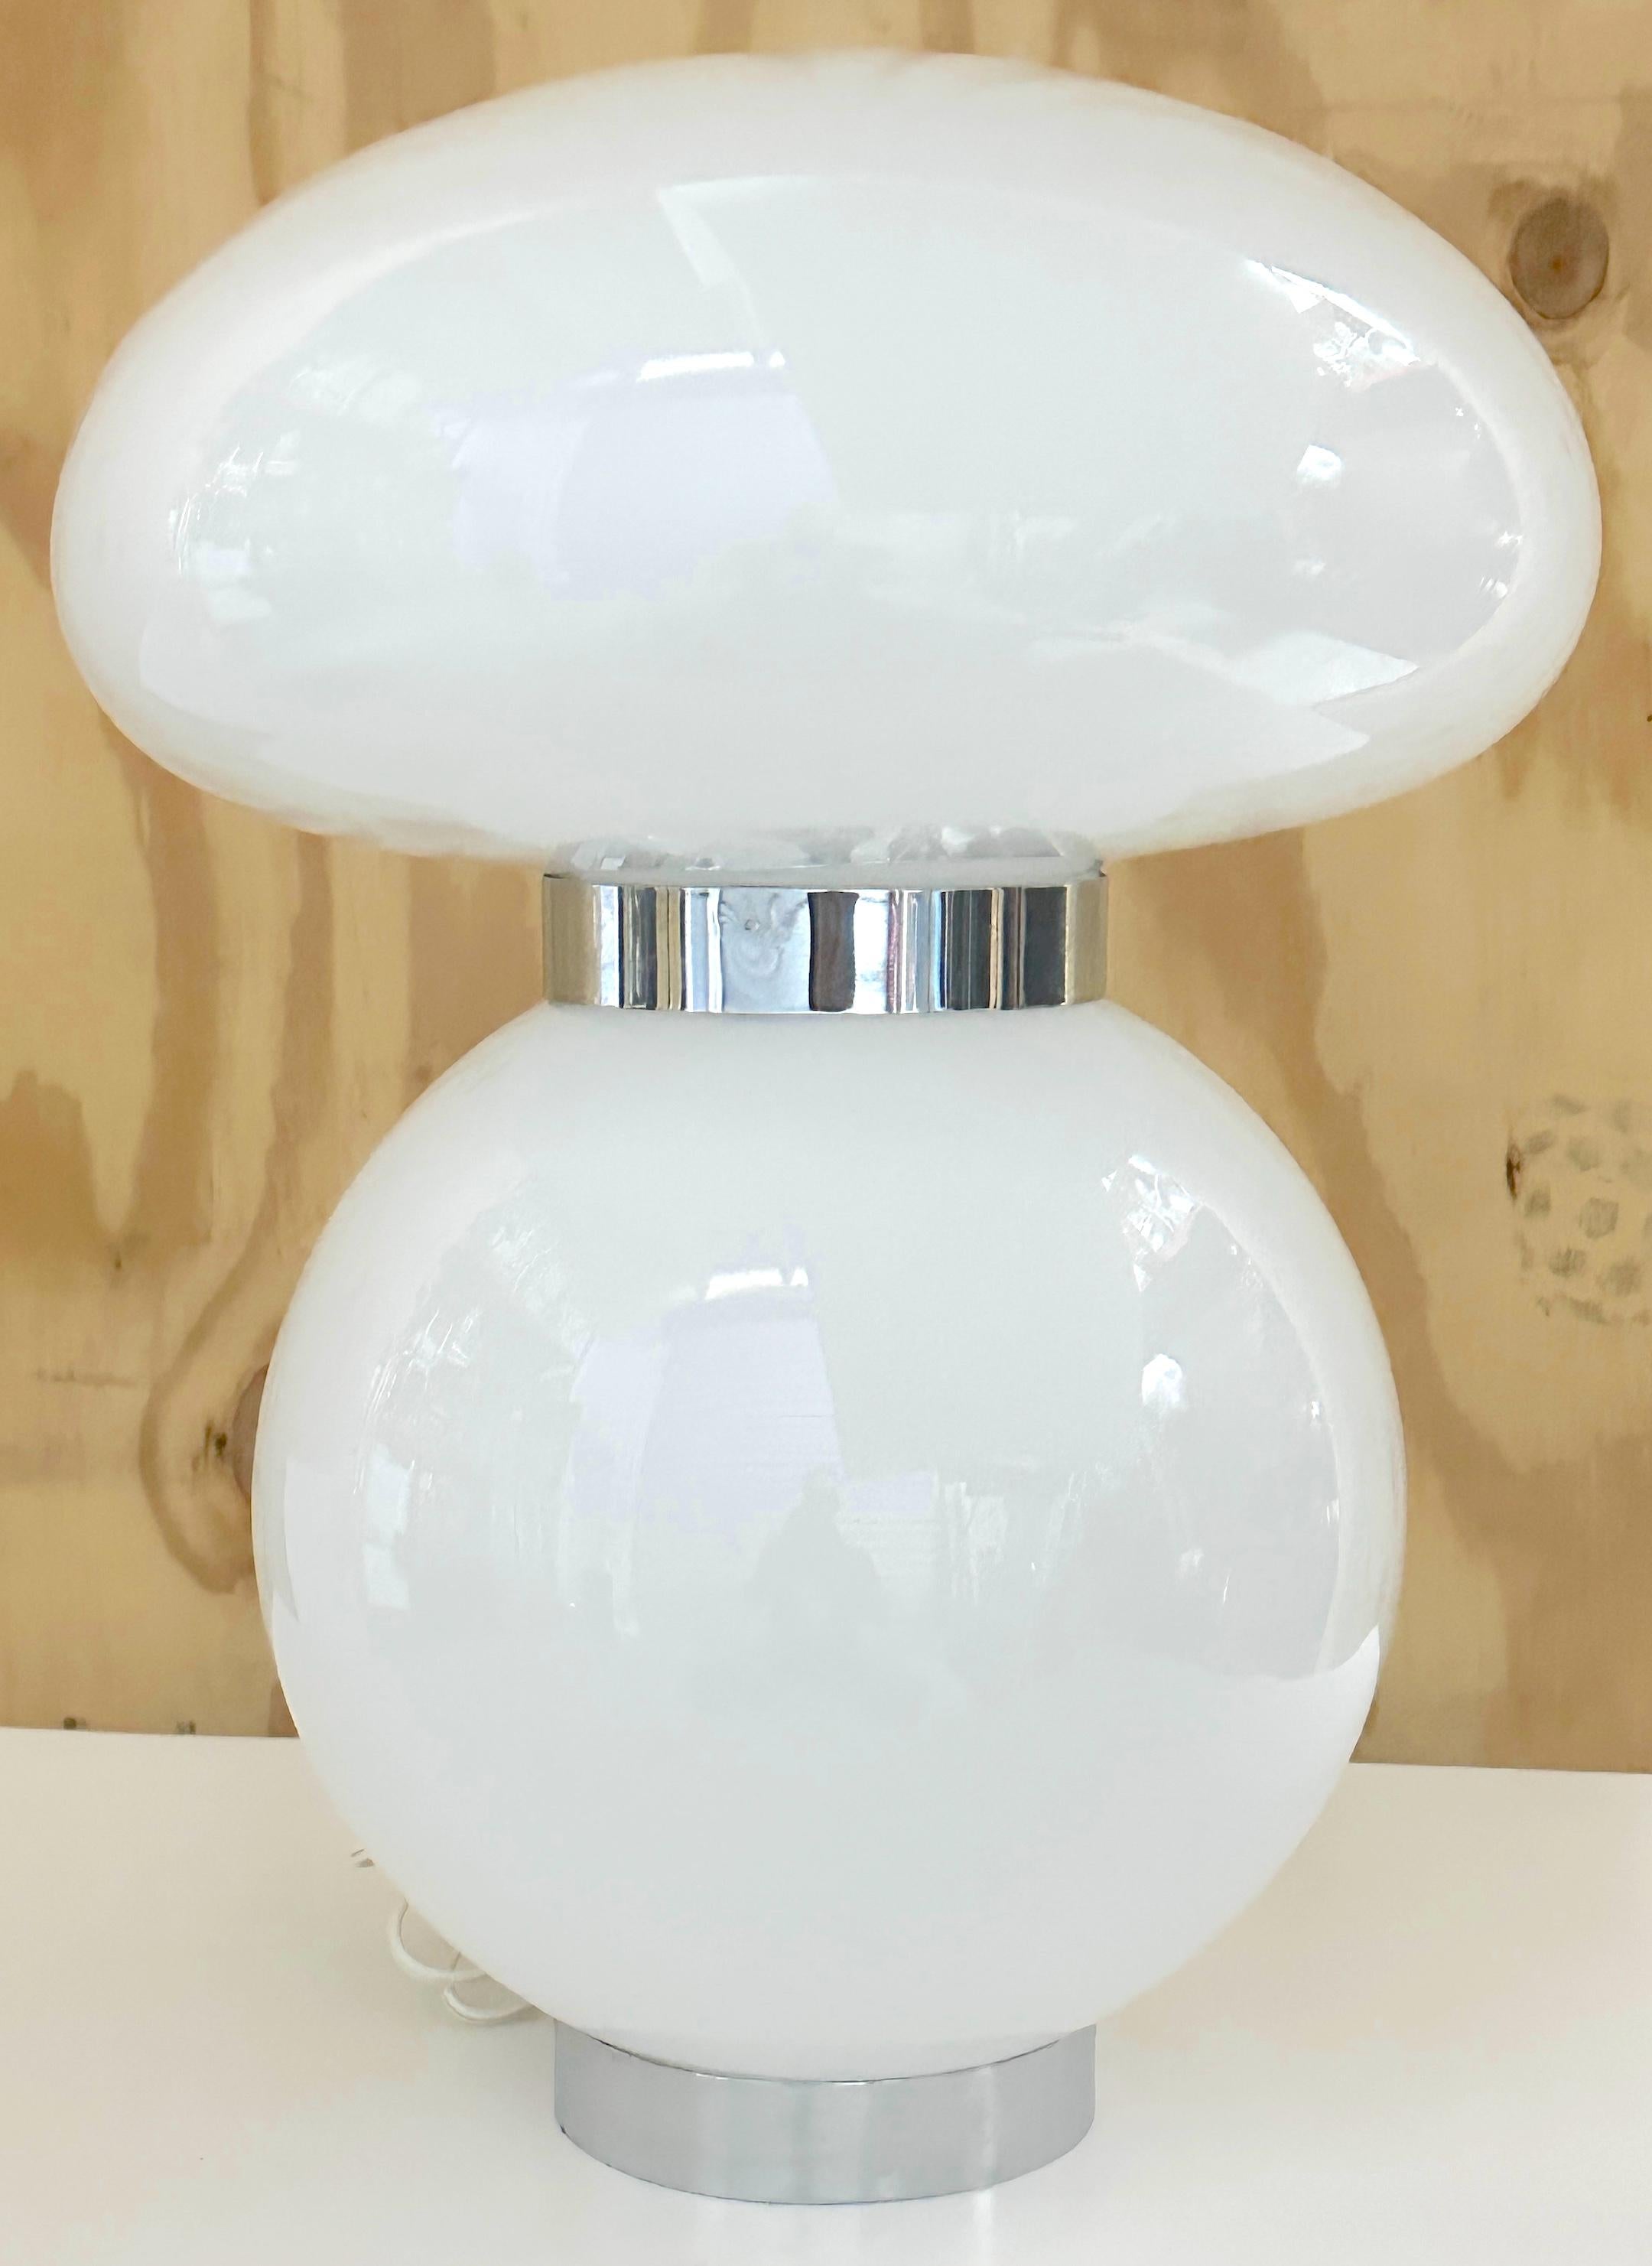 Carlo Nason for Mazzega, Mod White Murano Glass & Chrome Mushroom Lamp
Italie- Circa 1970

Une superbe lampe champignon en verre de Murano blanc et chrome de Carlo Nason for Mazzega Mod, originaire d'Italie dans les années 1970. Cette lampe exquise